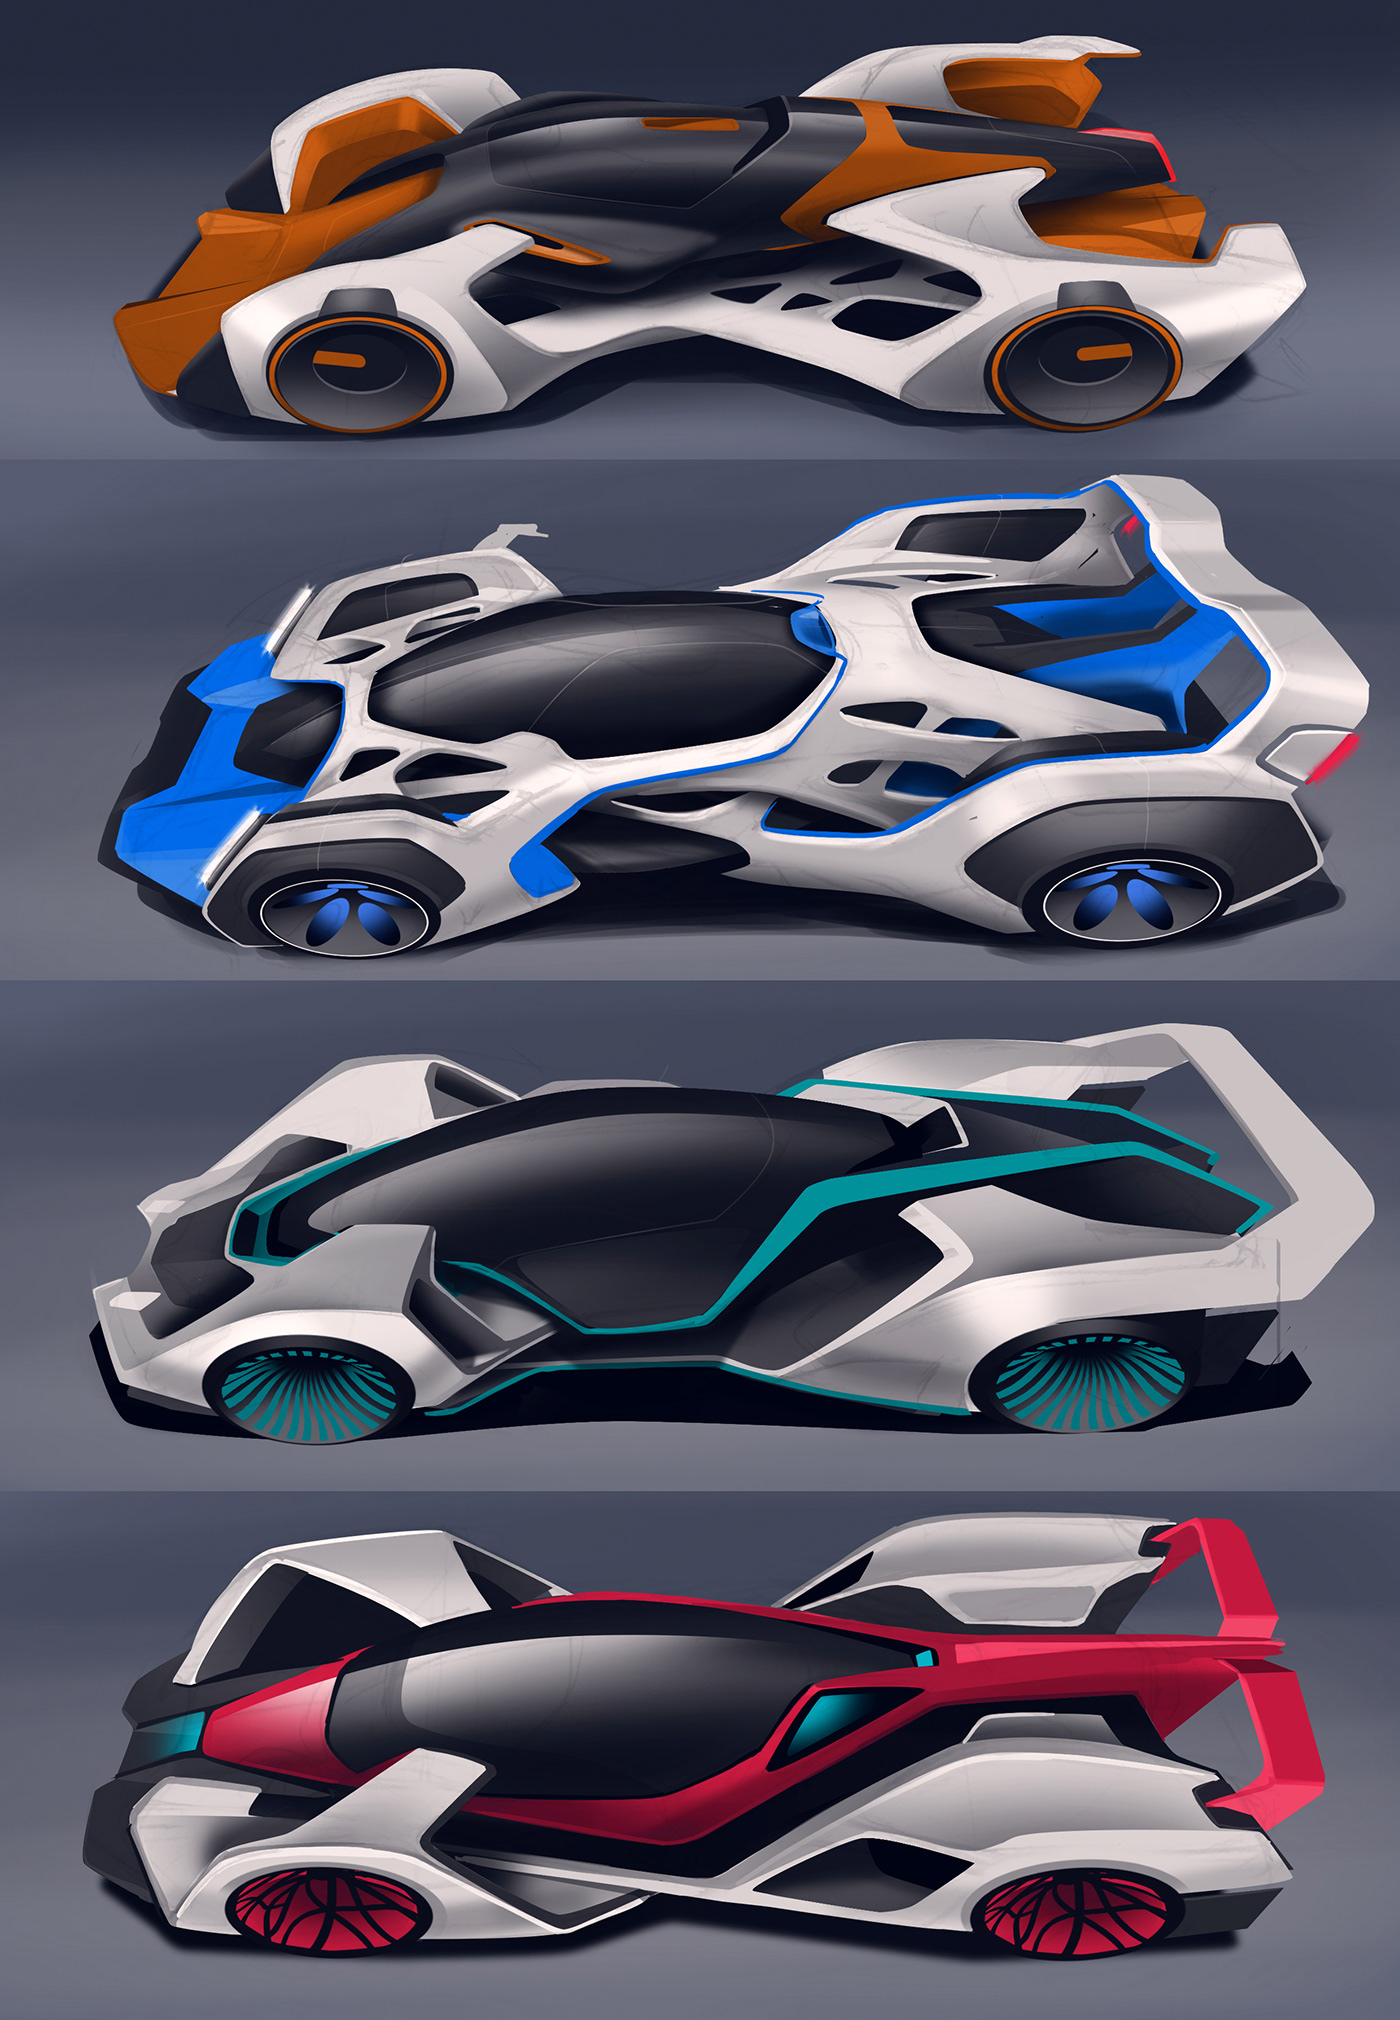 Key Car / Fast & Furious Spy Racers. 